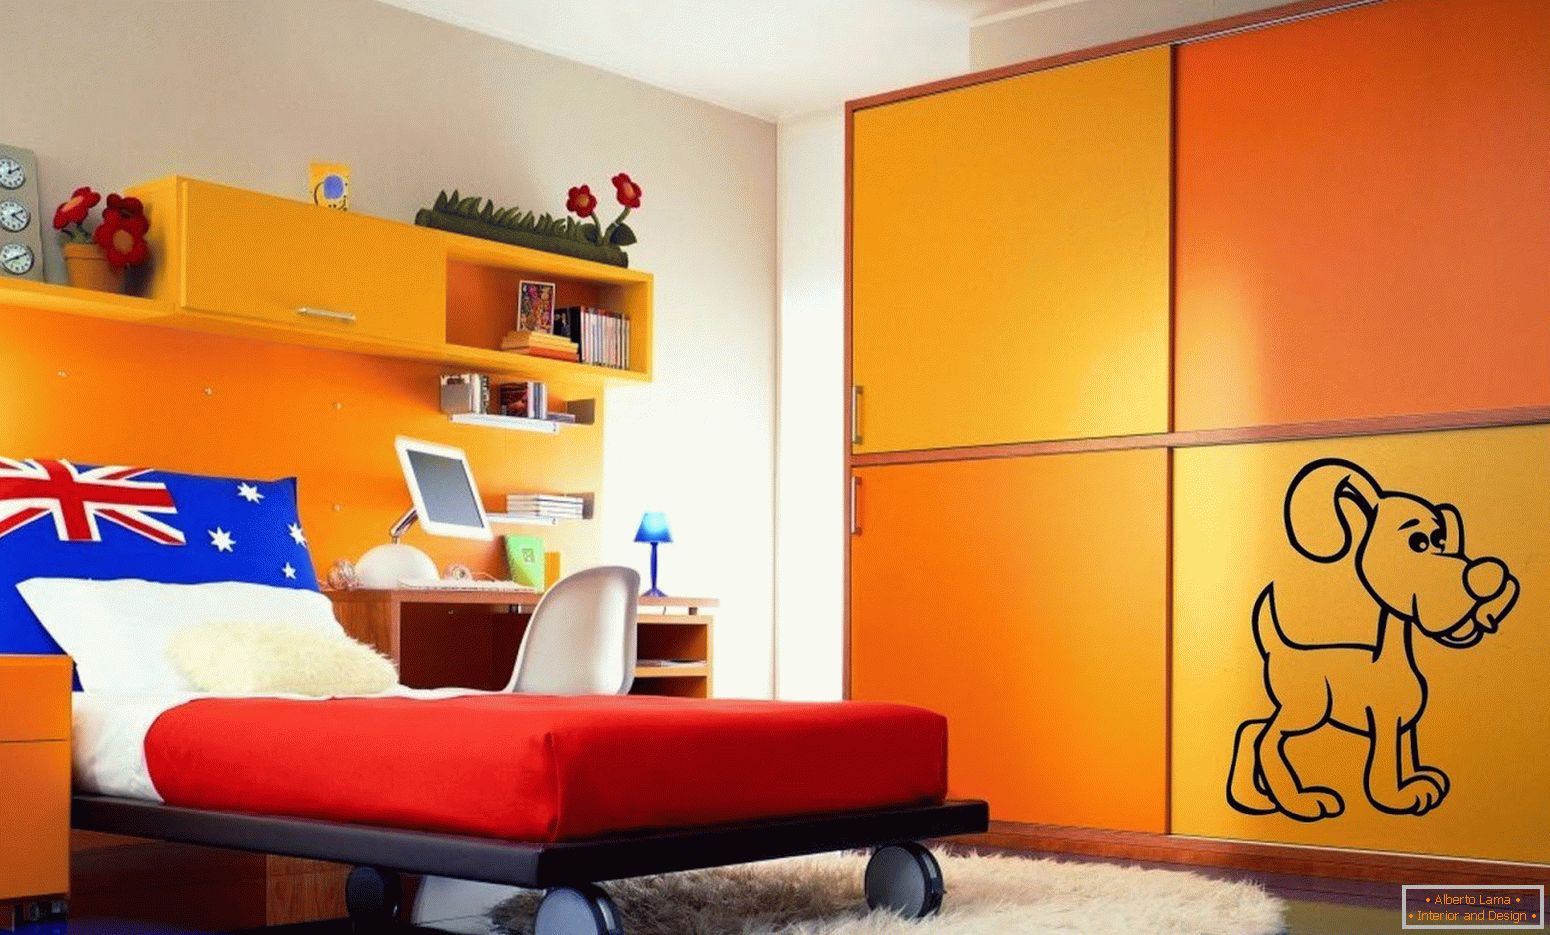 Furniture in orange color